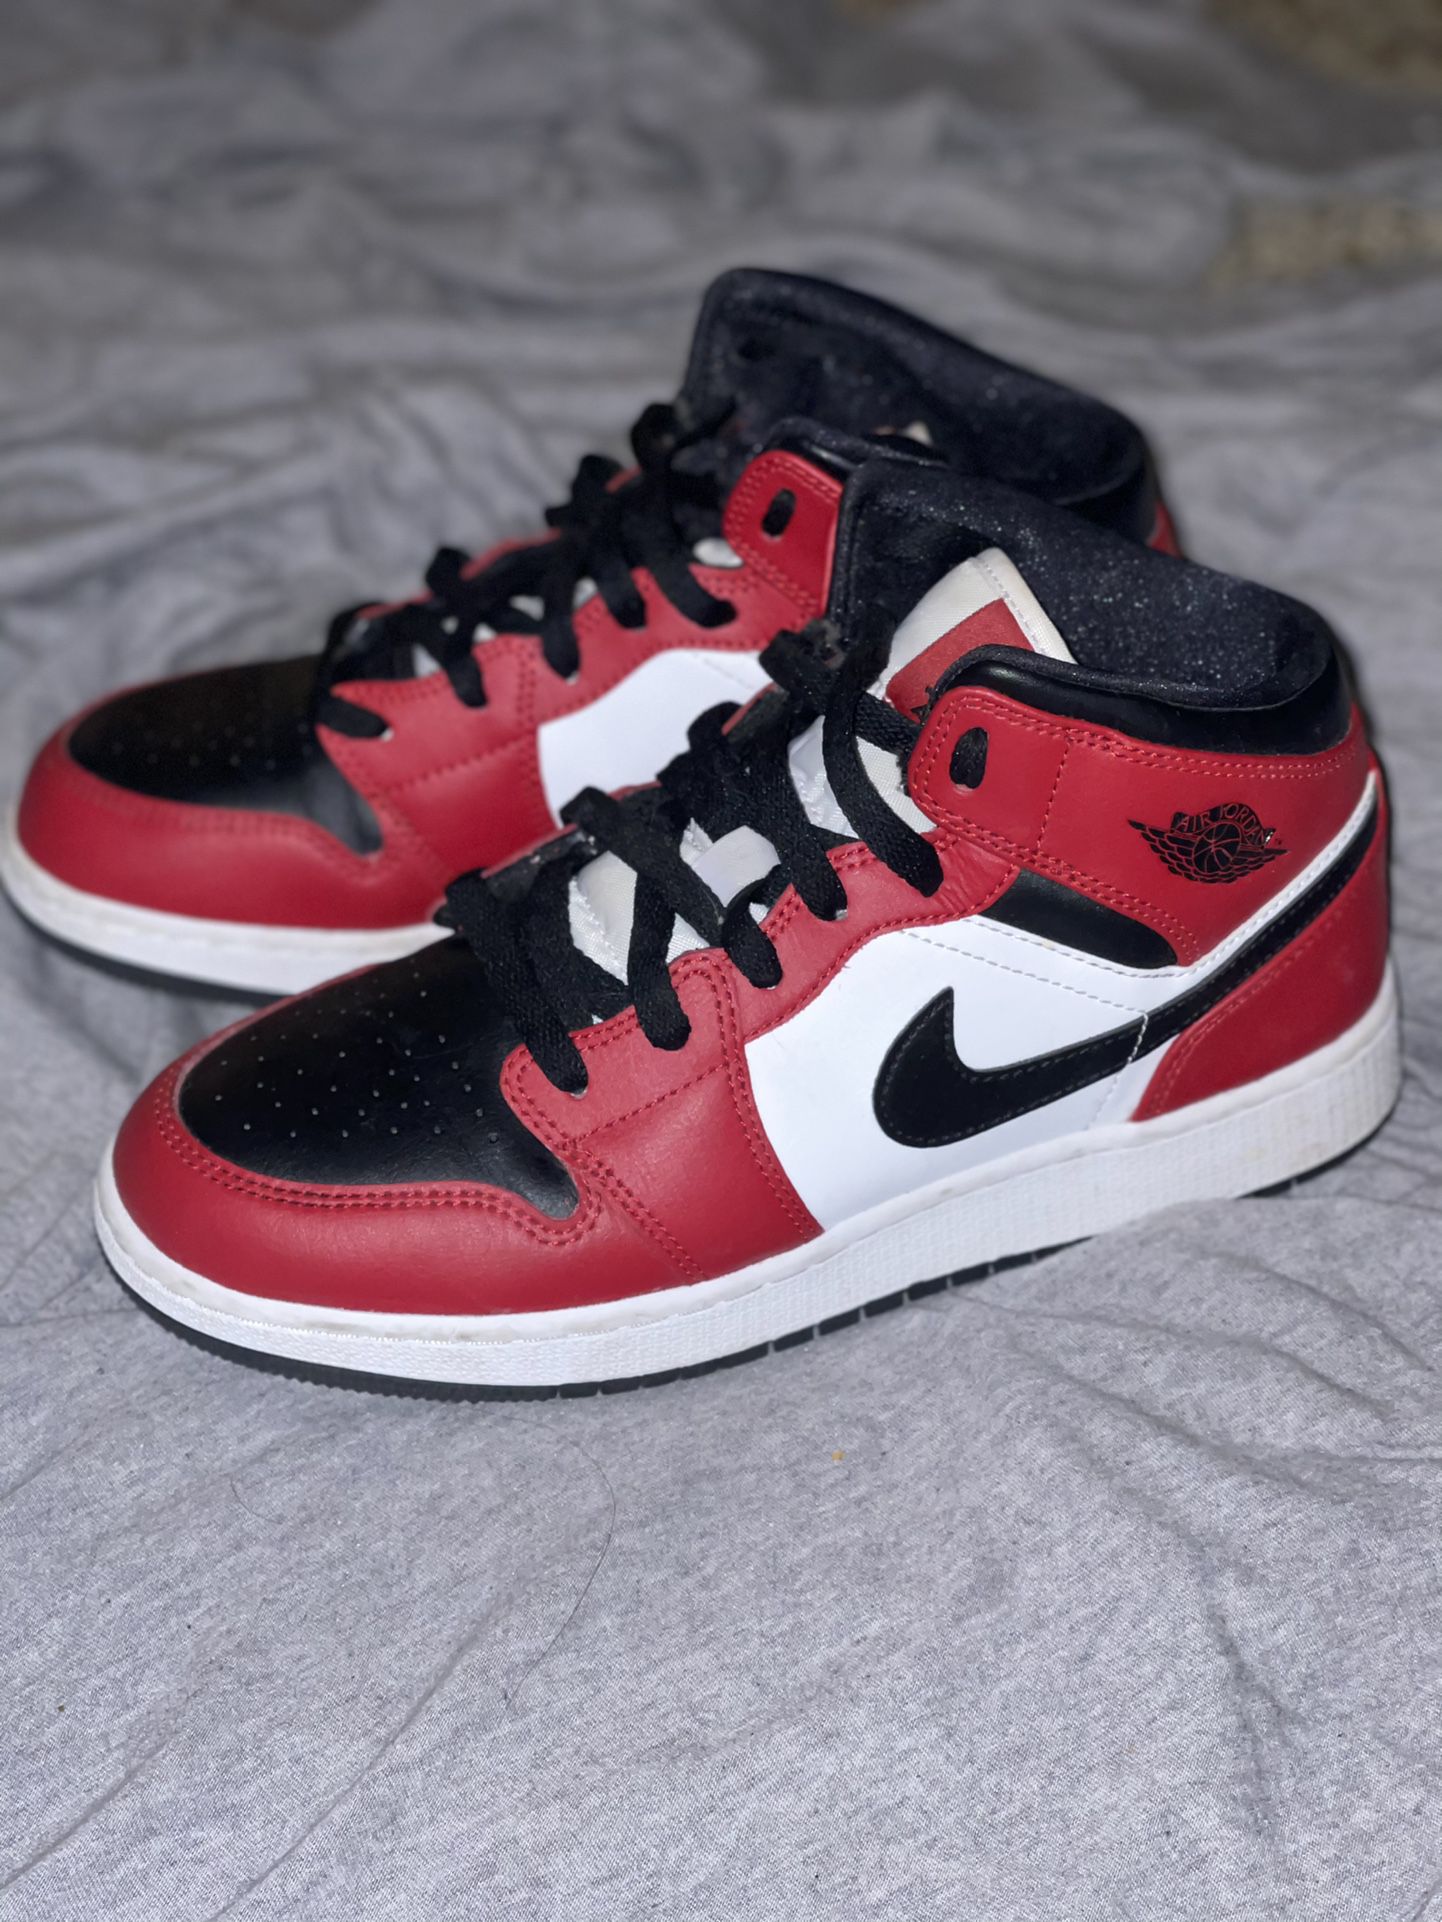 Jordan 1 Mid’s | Red w/ Black Toe | 6.5 Y or 8 W